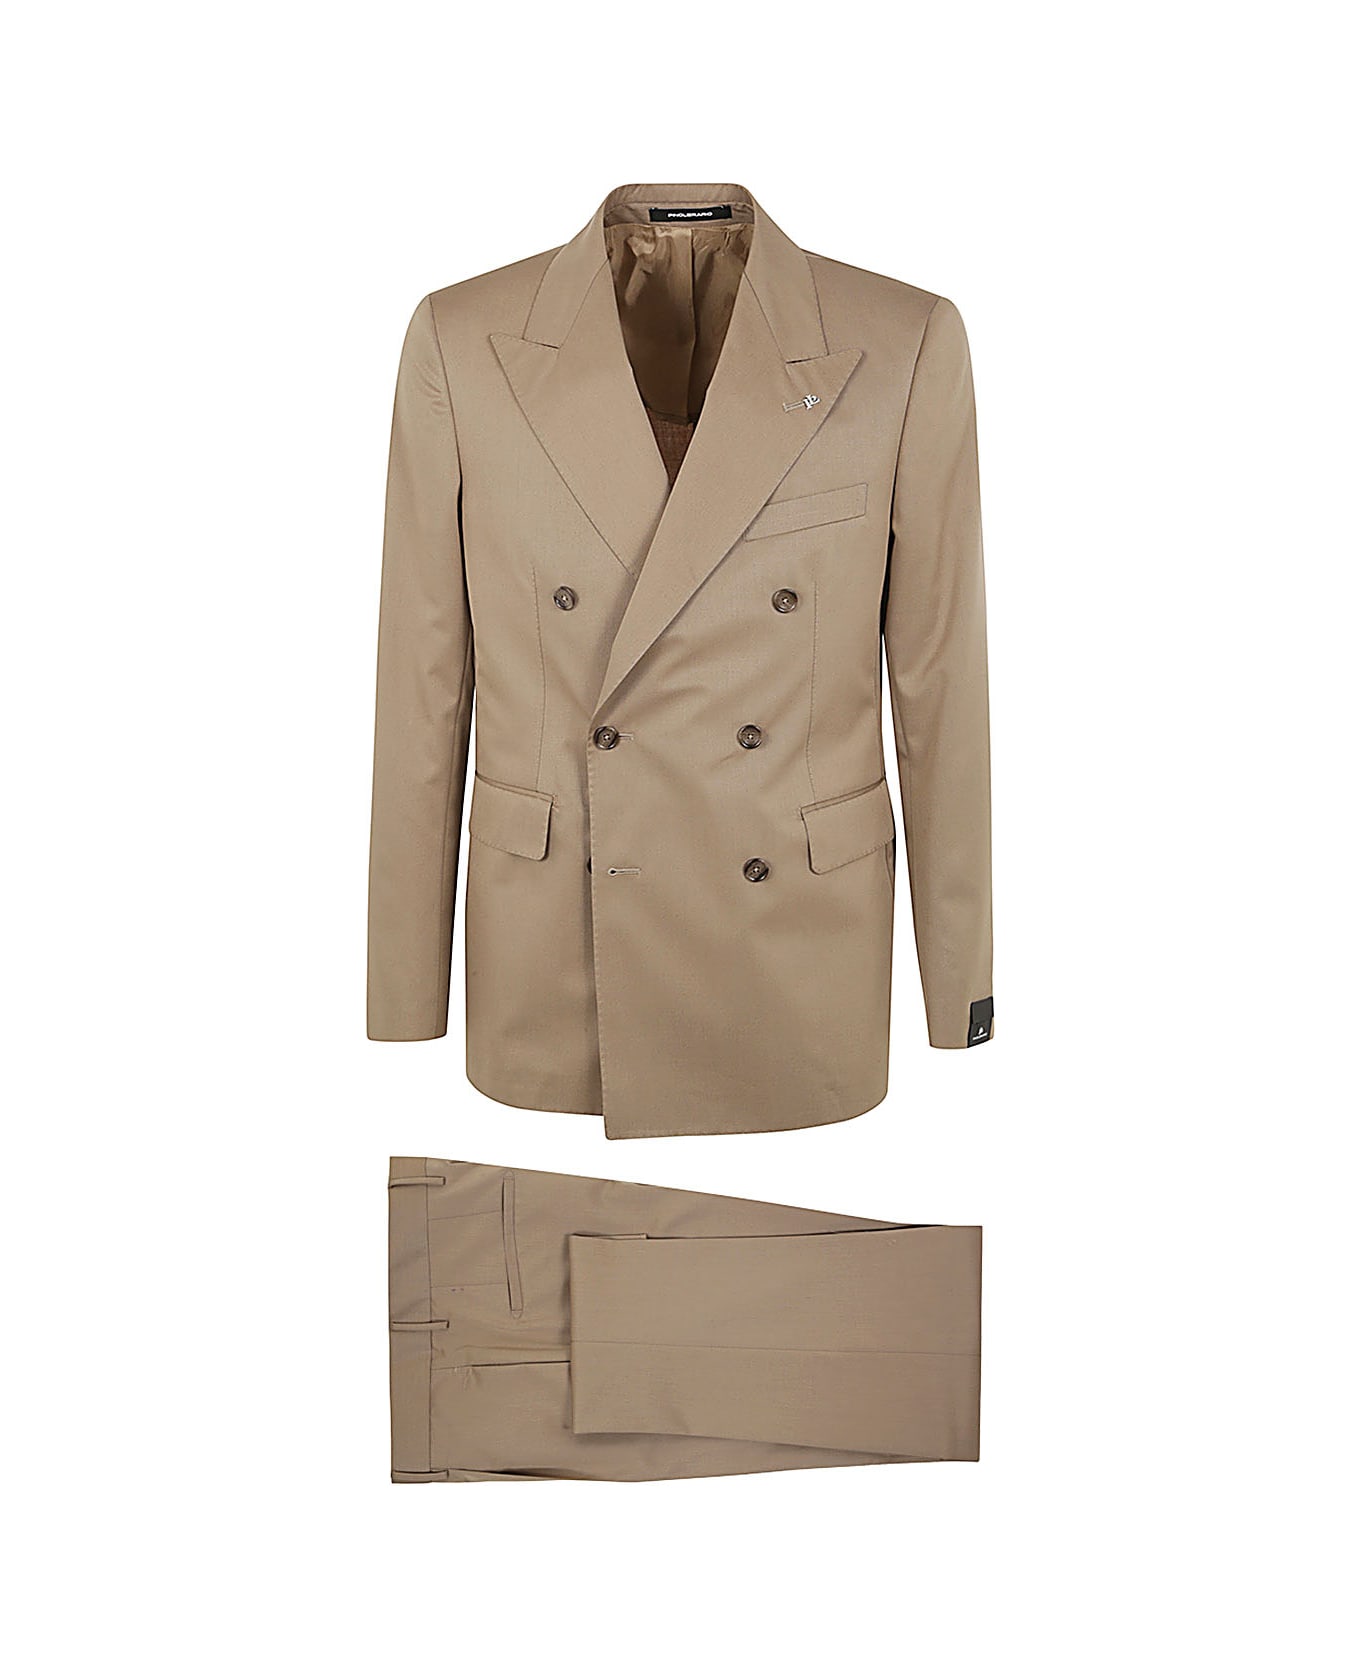 Tagliatore Double Breasted Suit - Khaki